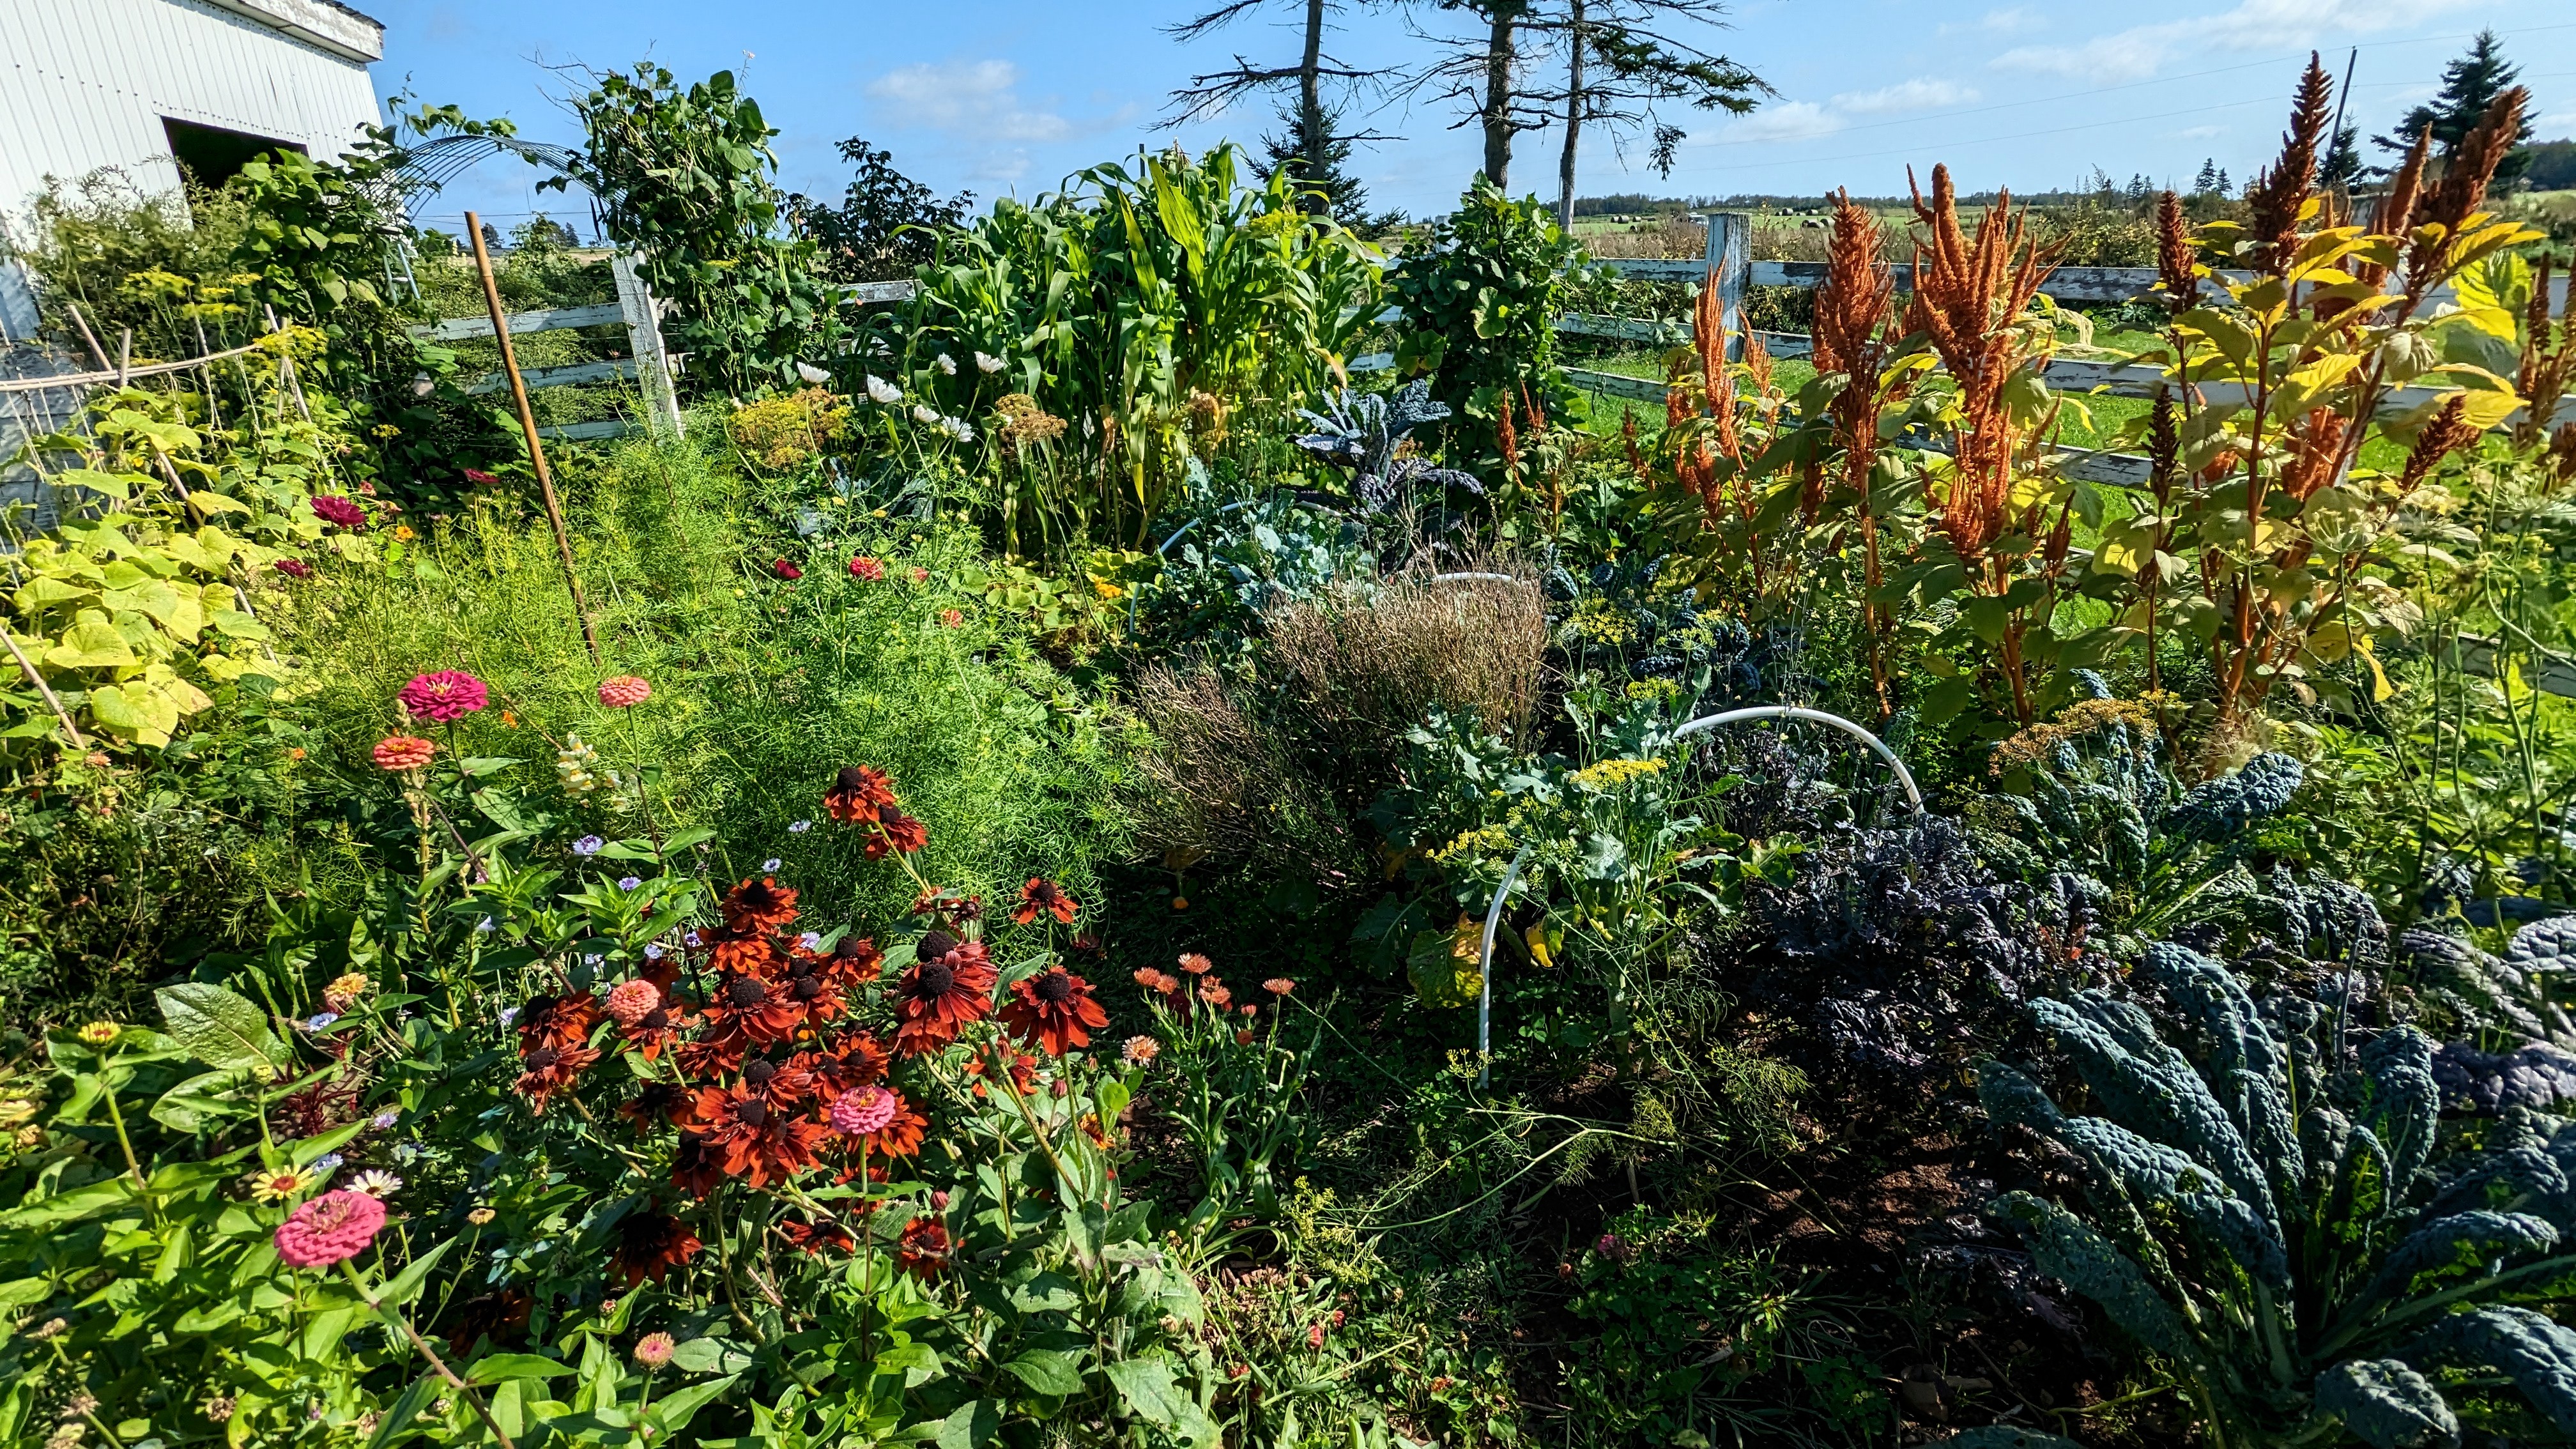 A bursting veggie garden.